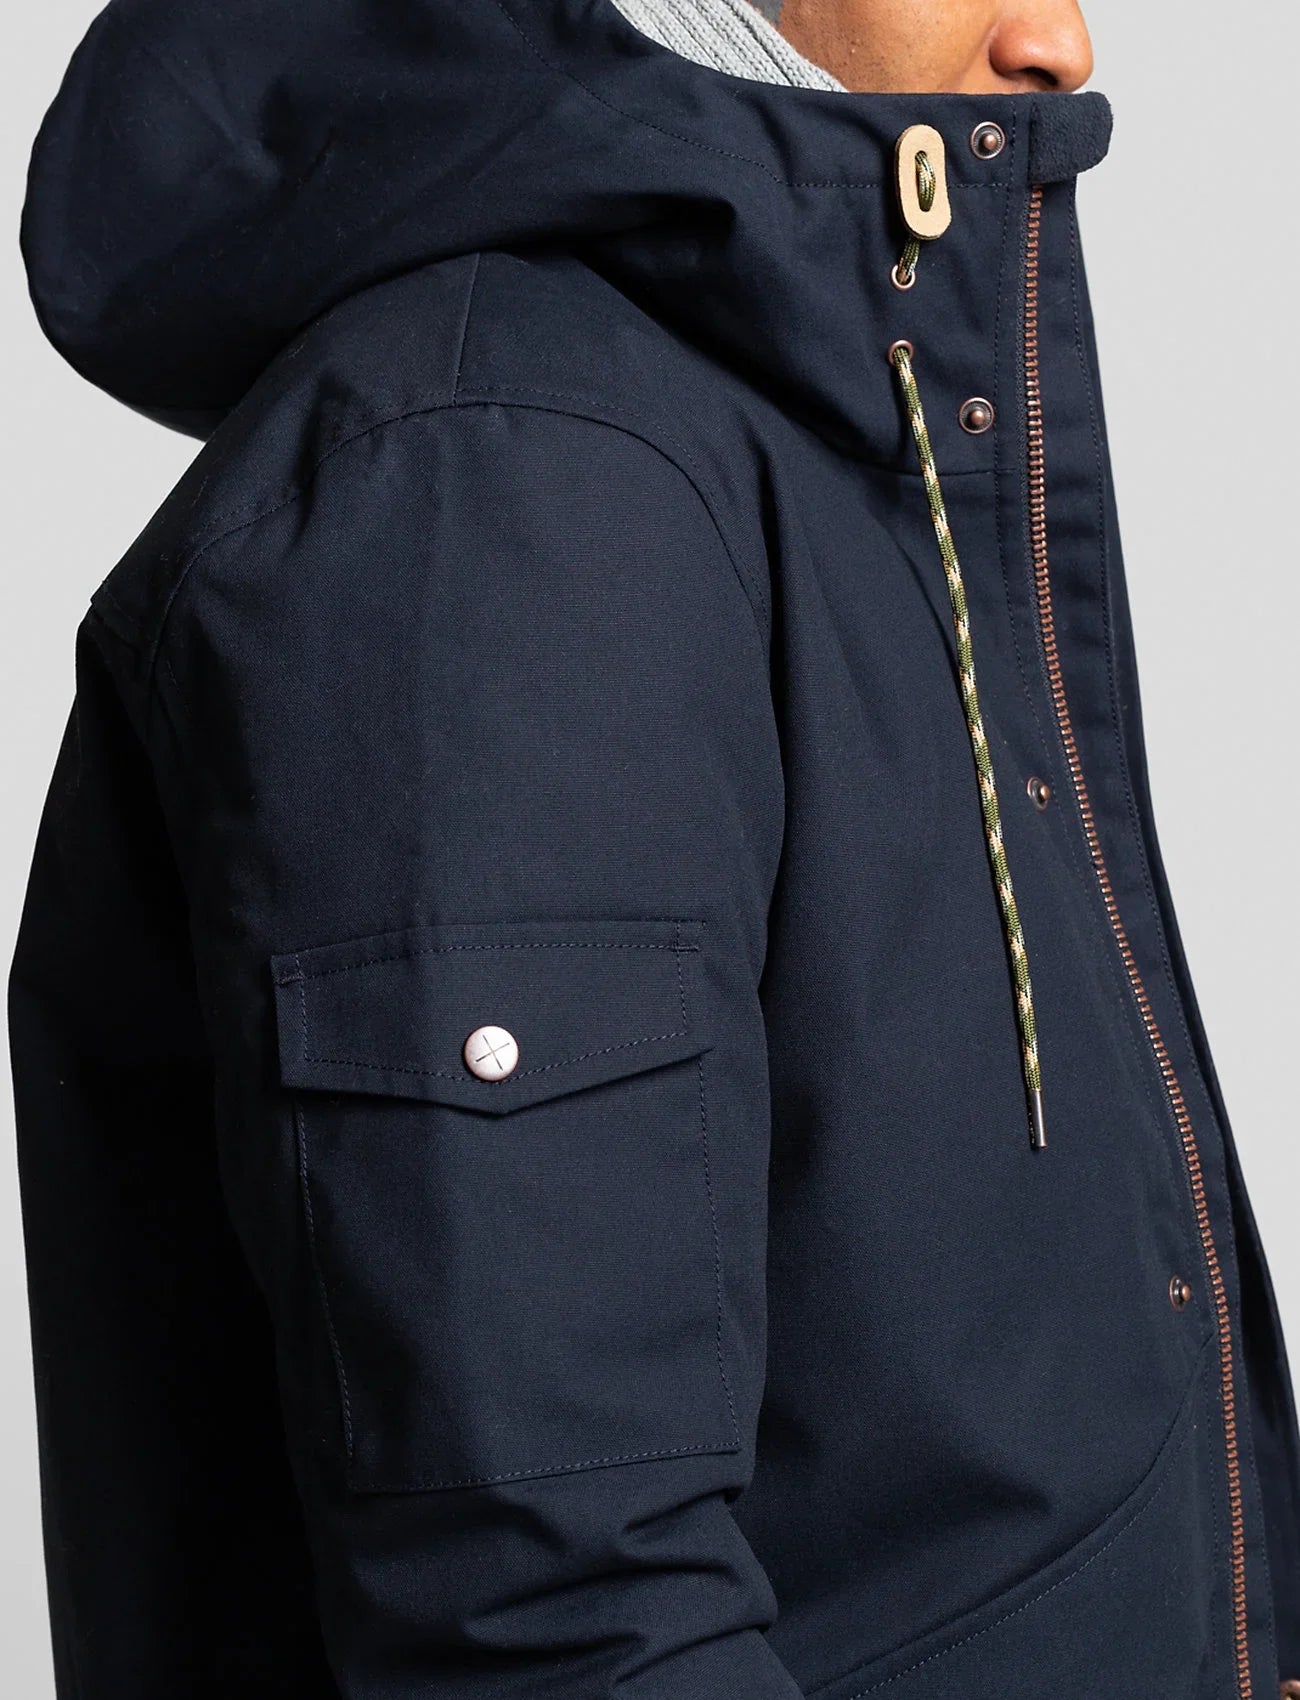 'Revolution 7688 Callesen Jacket' in 'Navy' colour